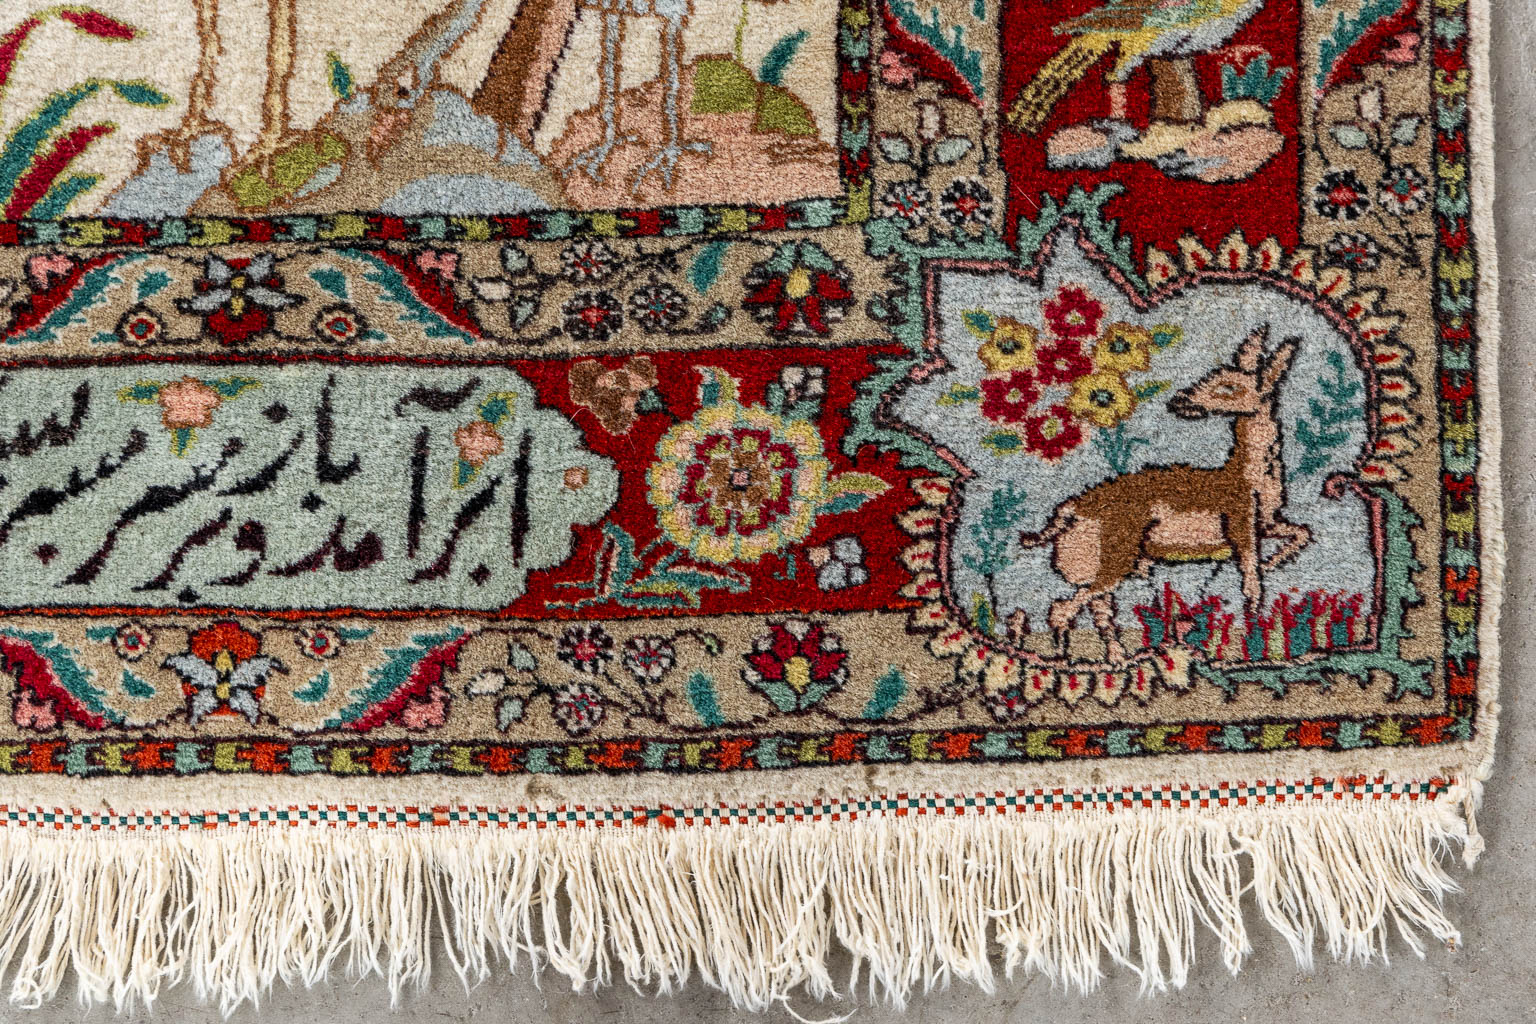 An Oriental hand-made carpet, Tabriz. Signed. (L:150 x W:107 cm)